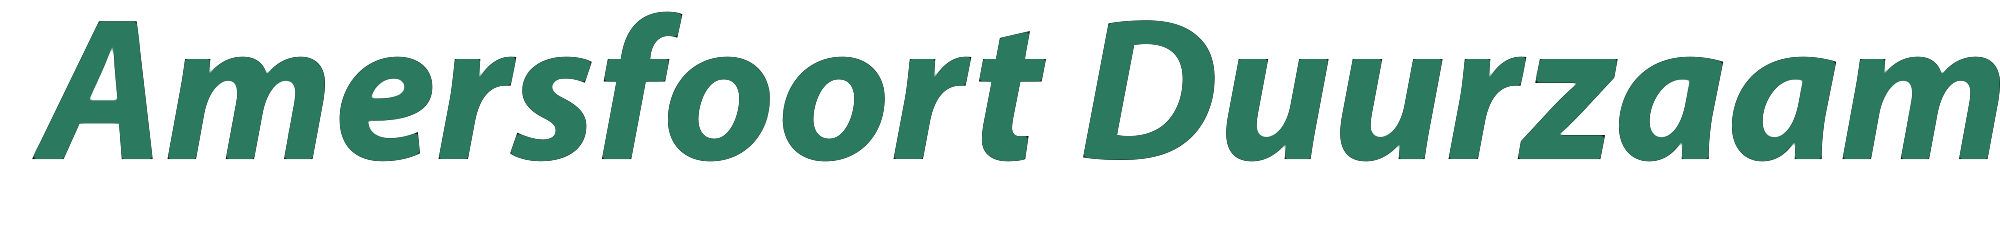 Amersfoort duurzame stad logo